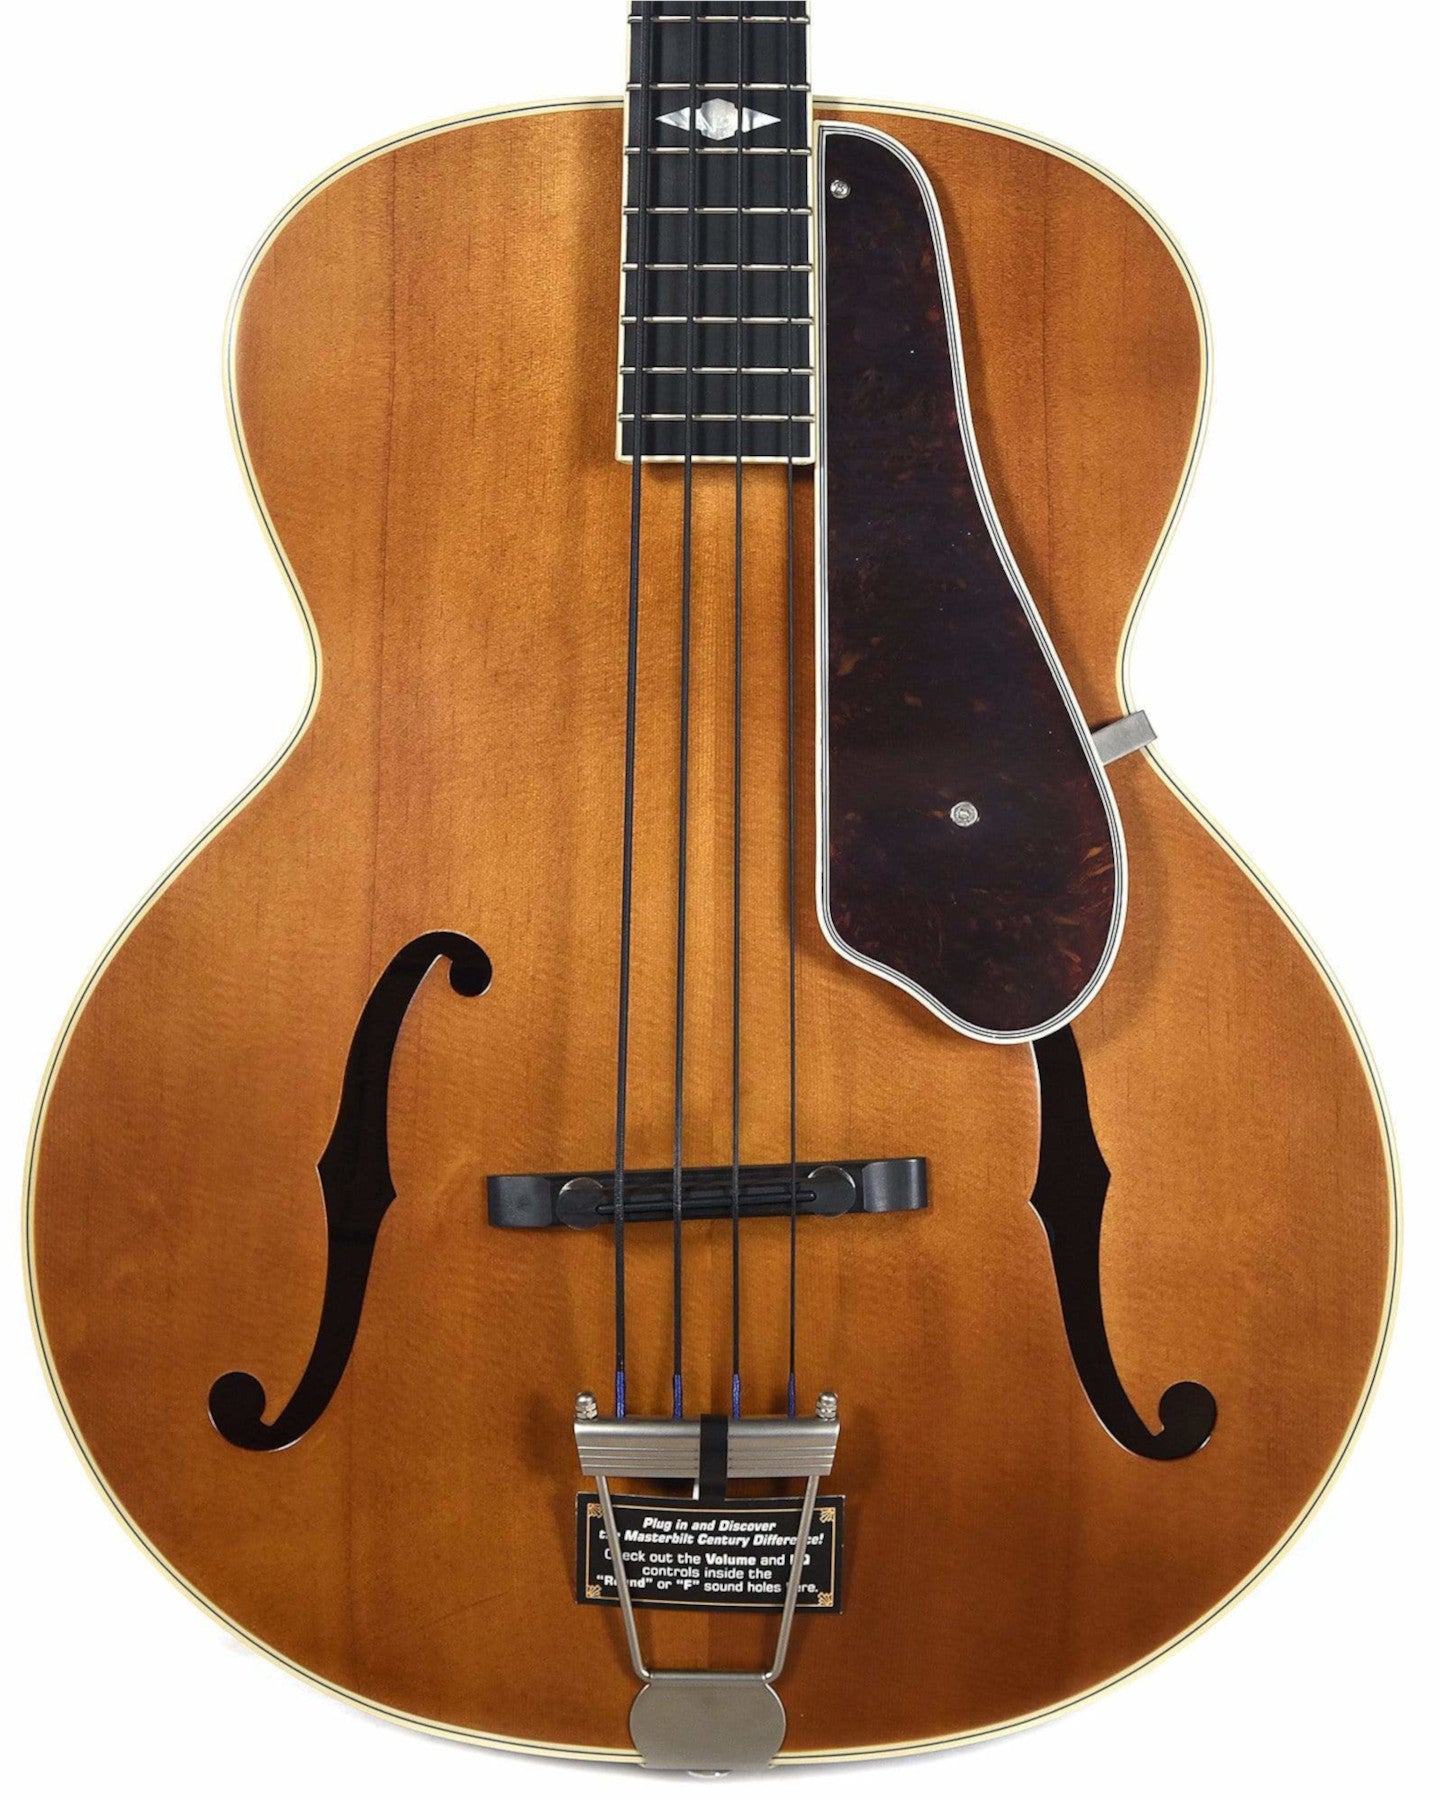 De Luxe Classic AcEI 4 String, Vintage Natural